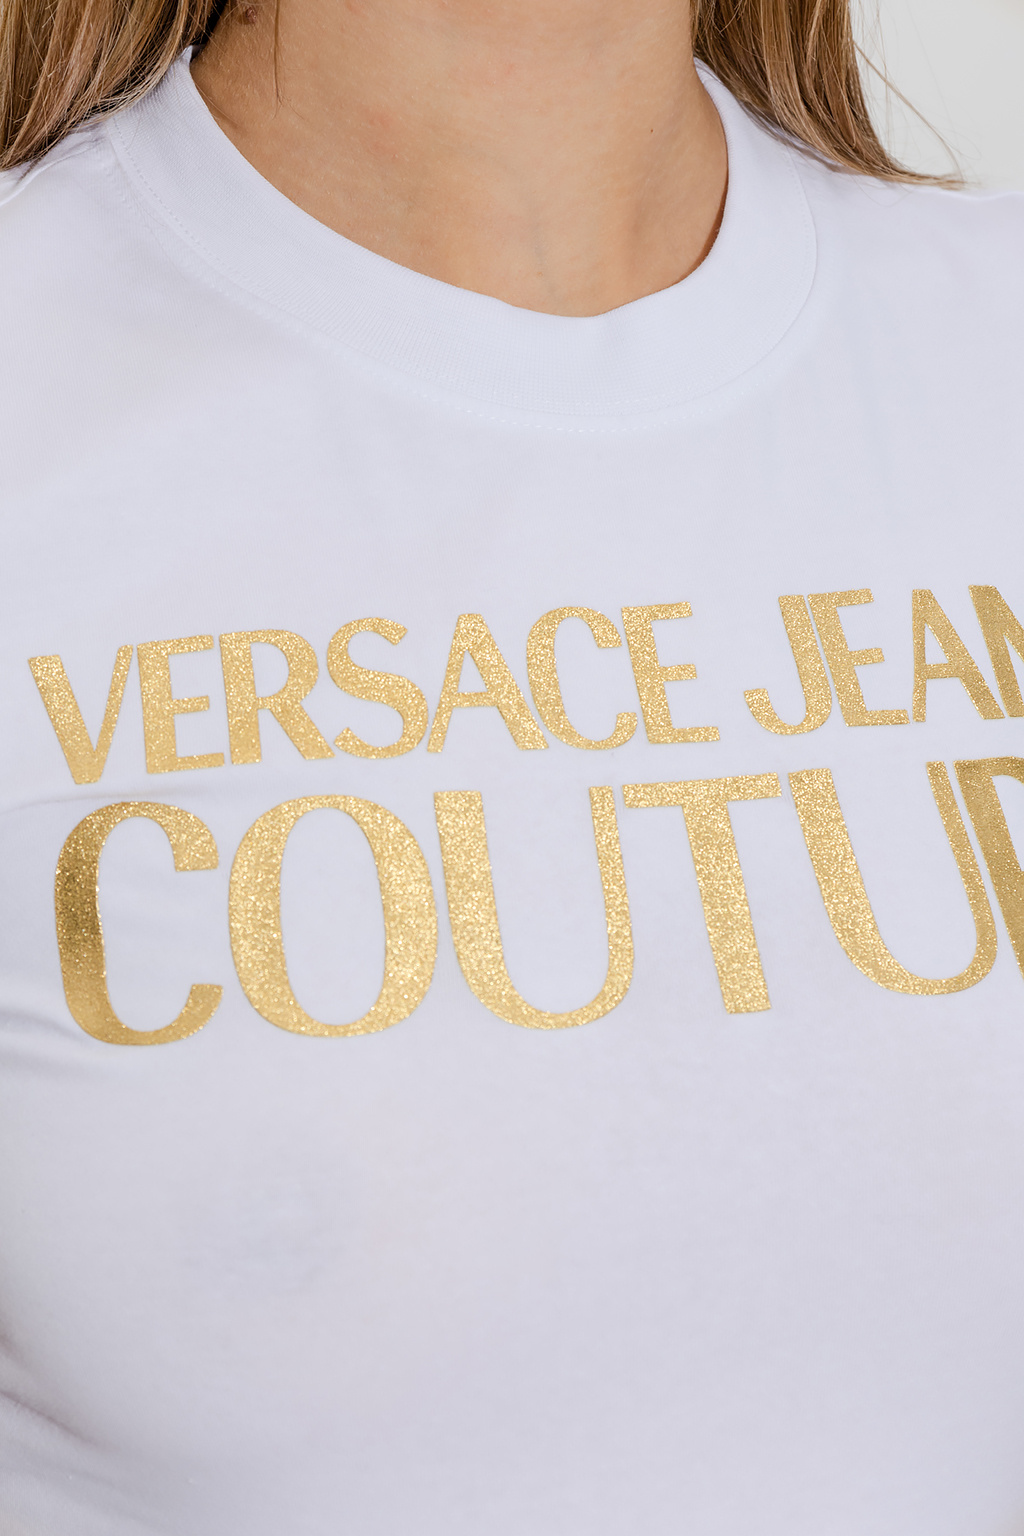 Versace Jeans Couture Gabriele Pasini logo-patch cashmere hoodie